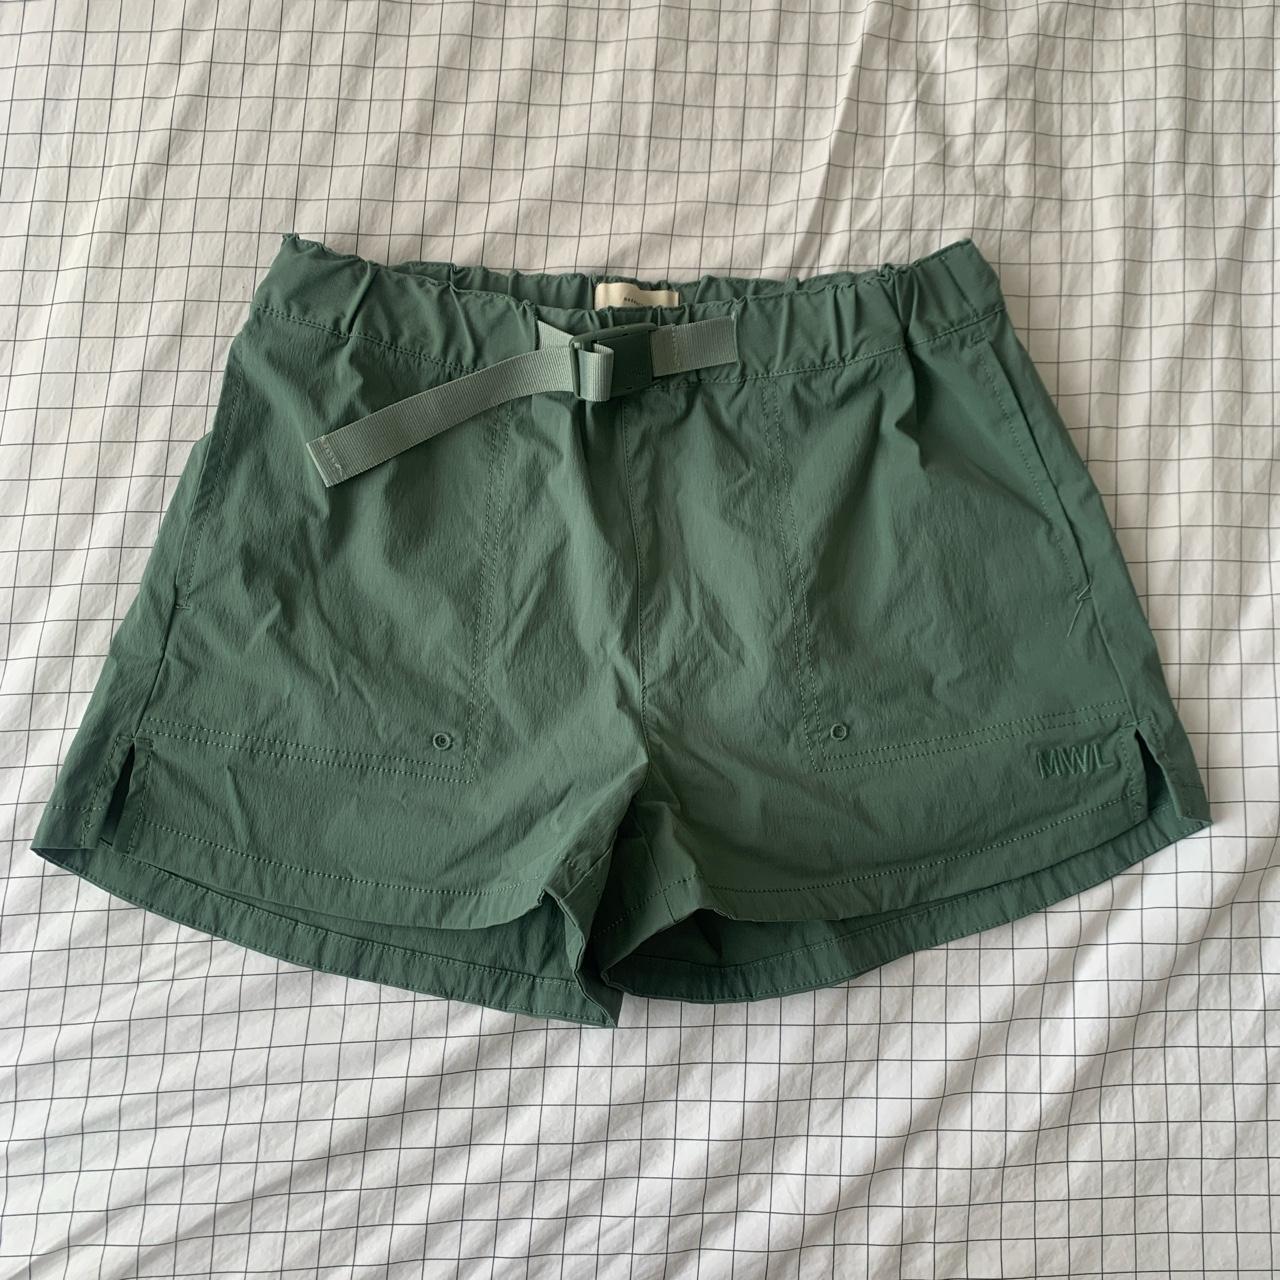 Madewell Women's Green Shorts